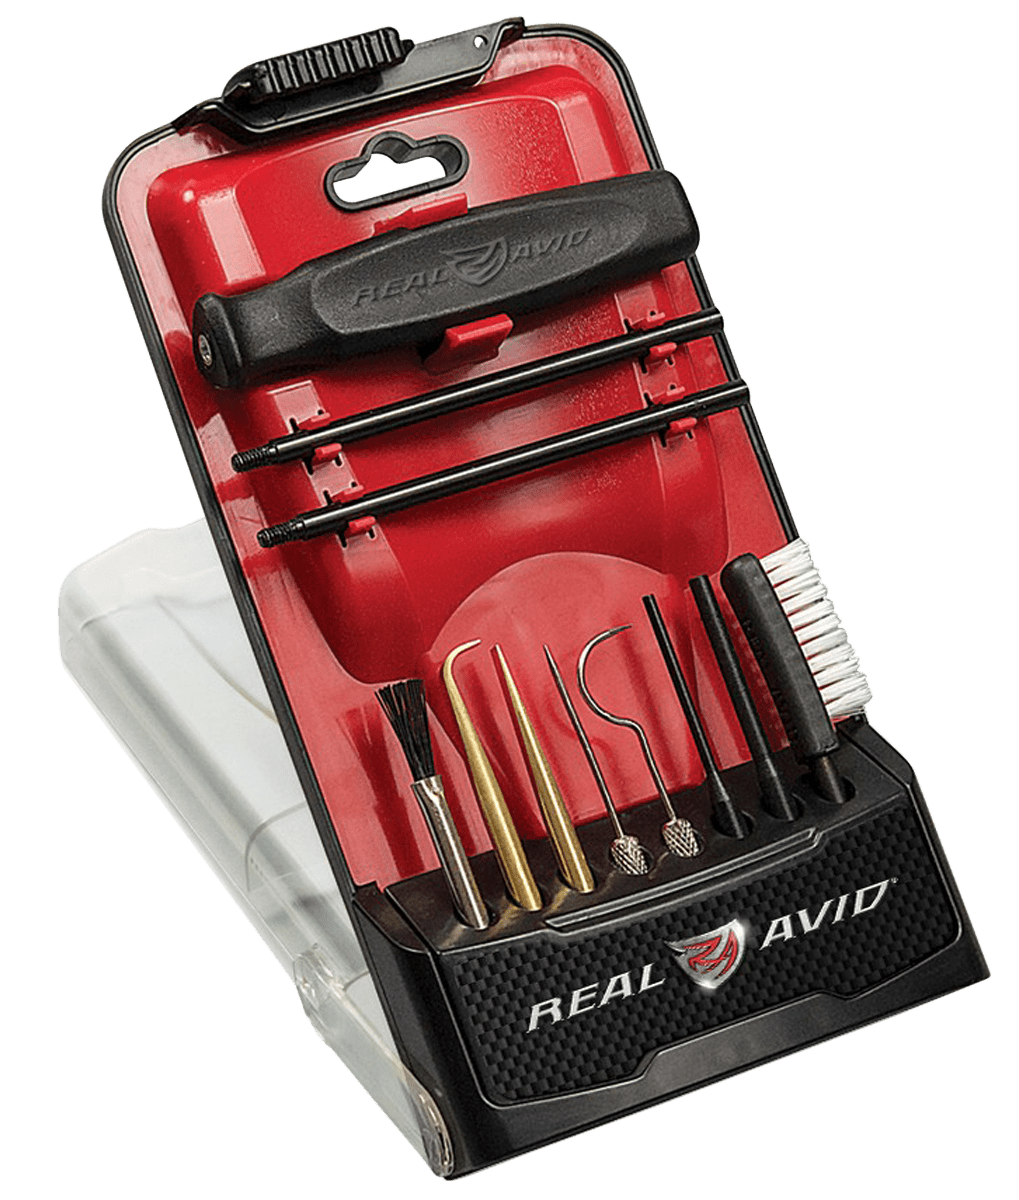 Real Avid Real Avid Gun Boss Pro - Precision Cleaning Tools Cleaning Kits